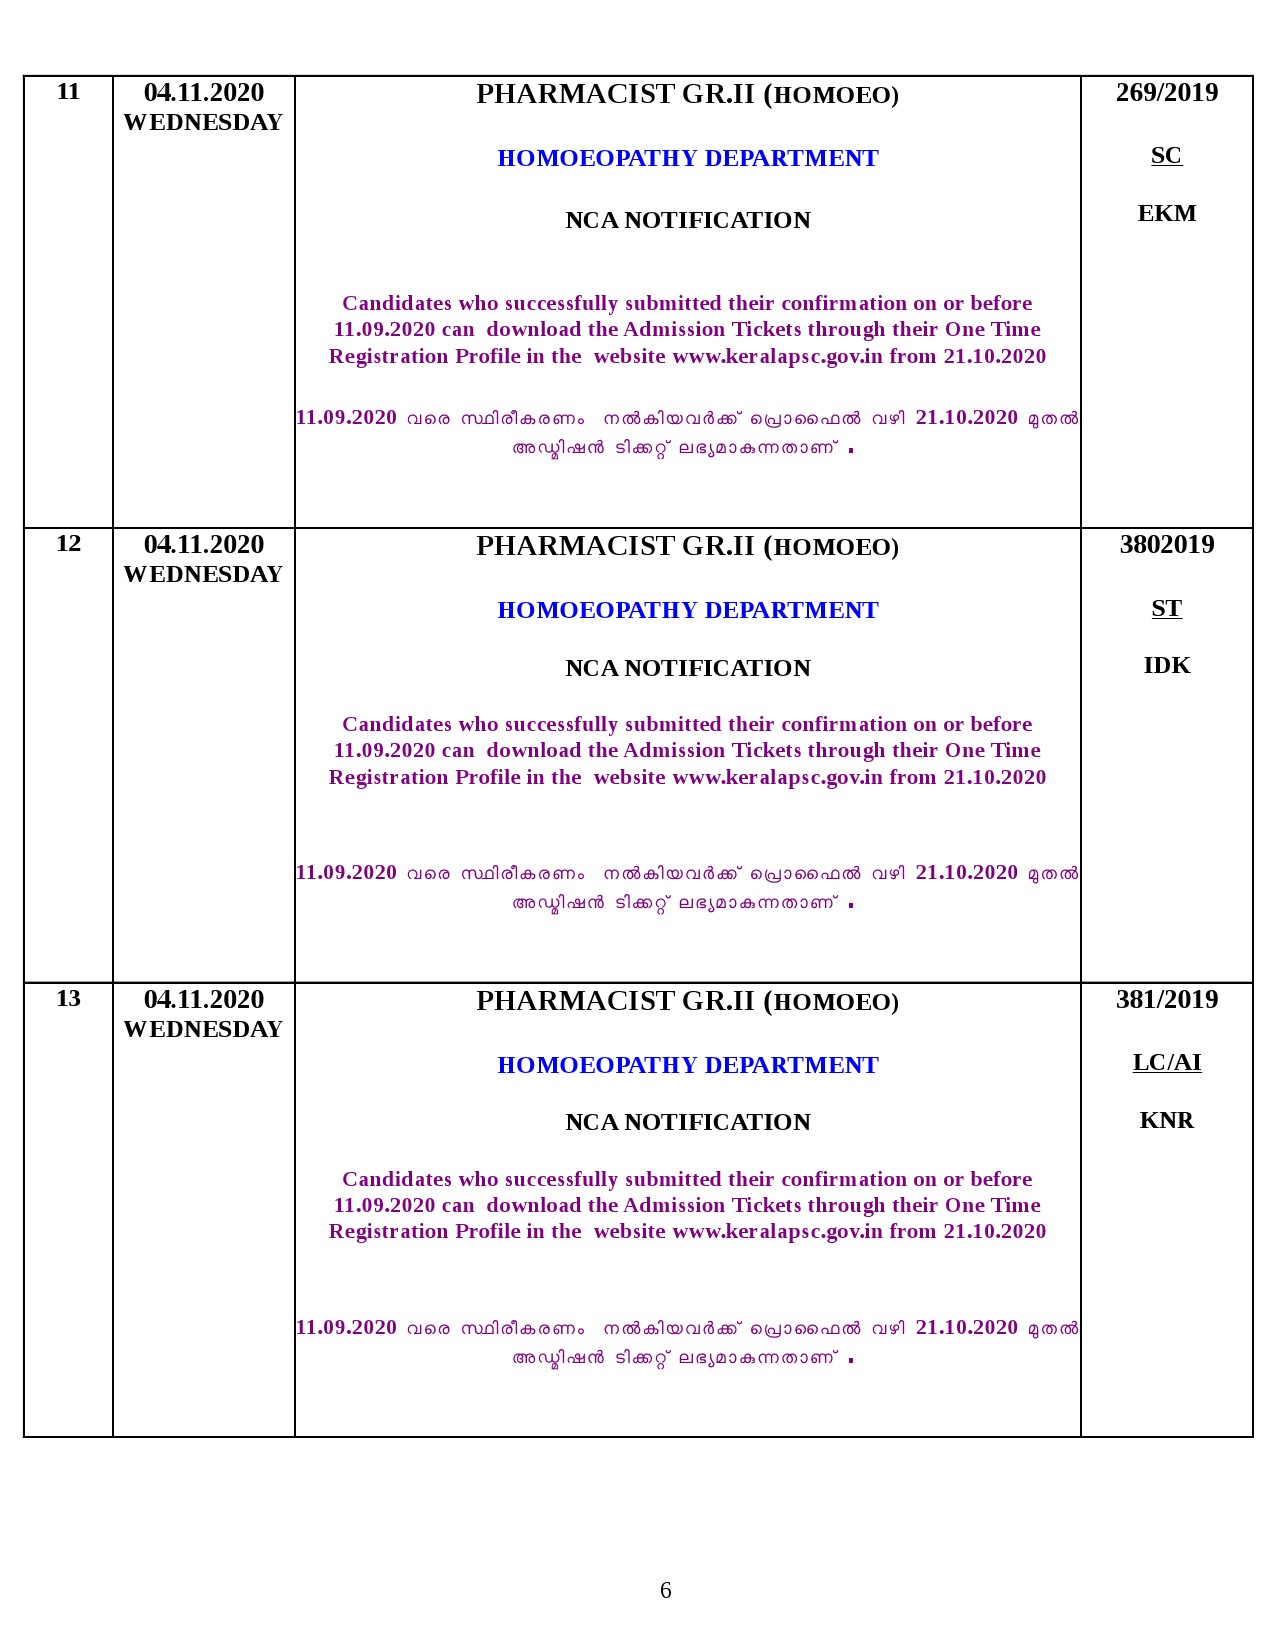 Kerala PSC Final Exam Schedule for November 2020 - Notification Image 6